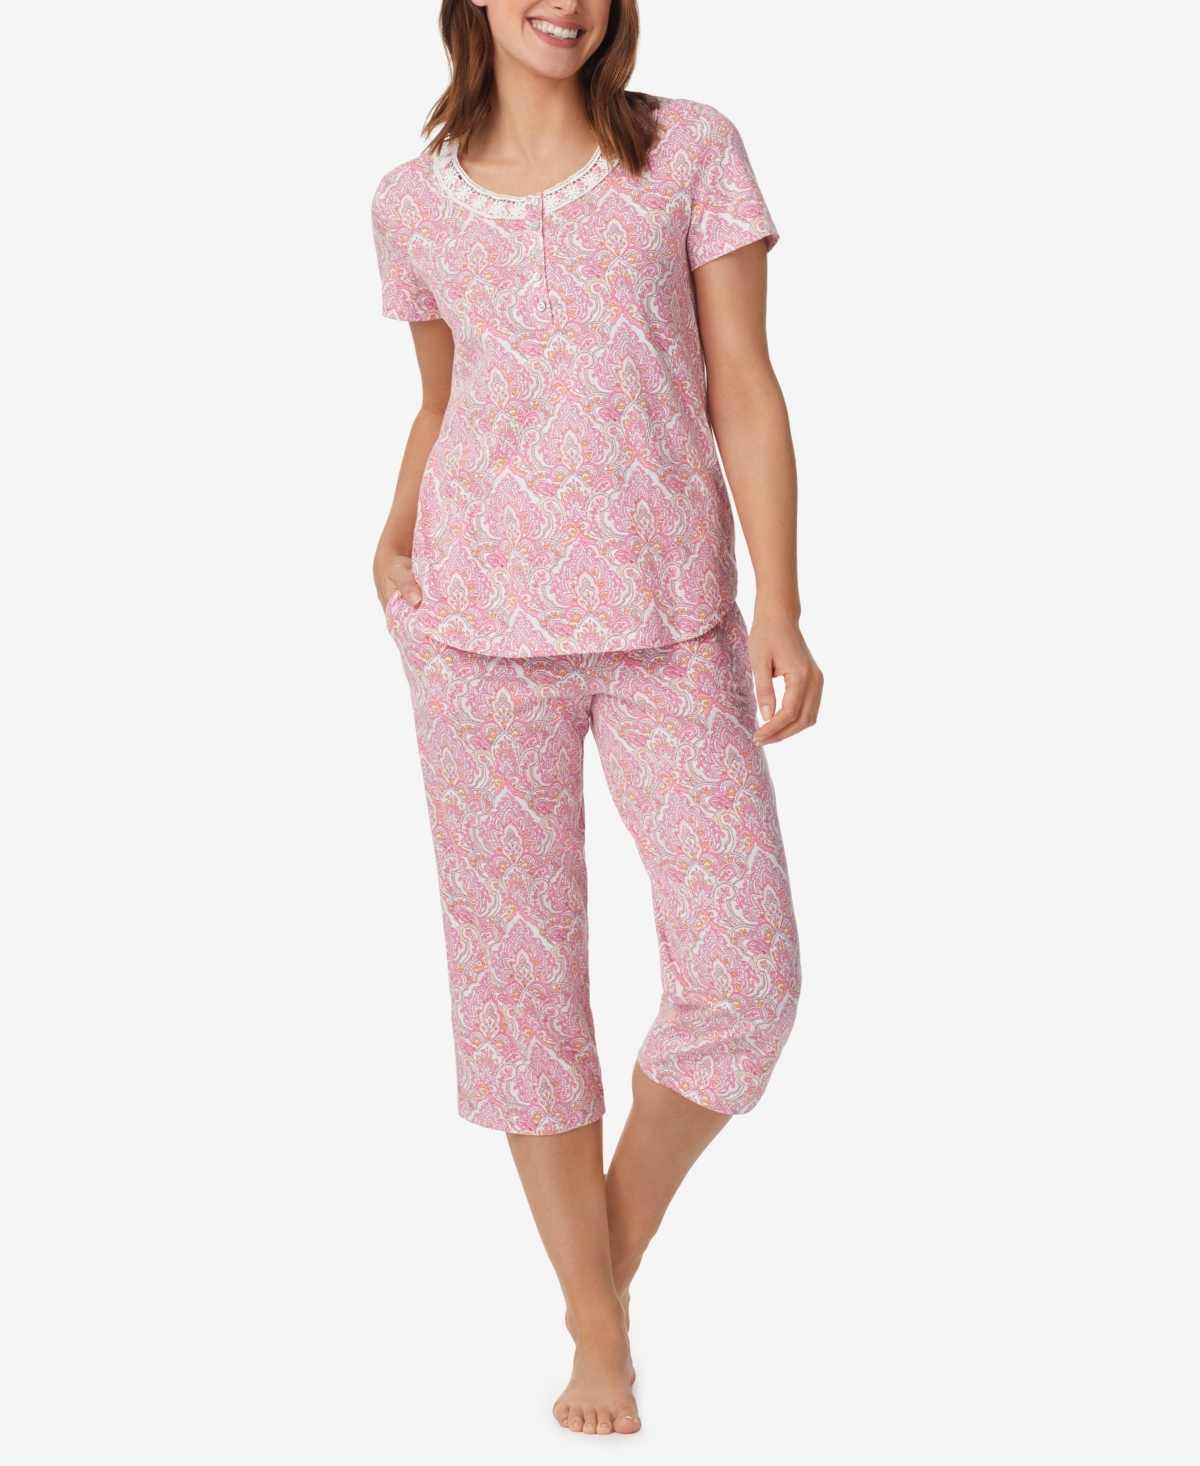 Women's Short Sleeve Top and Capri Pants 2 Piece Pajama Set - White Multi